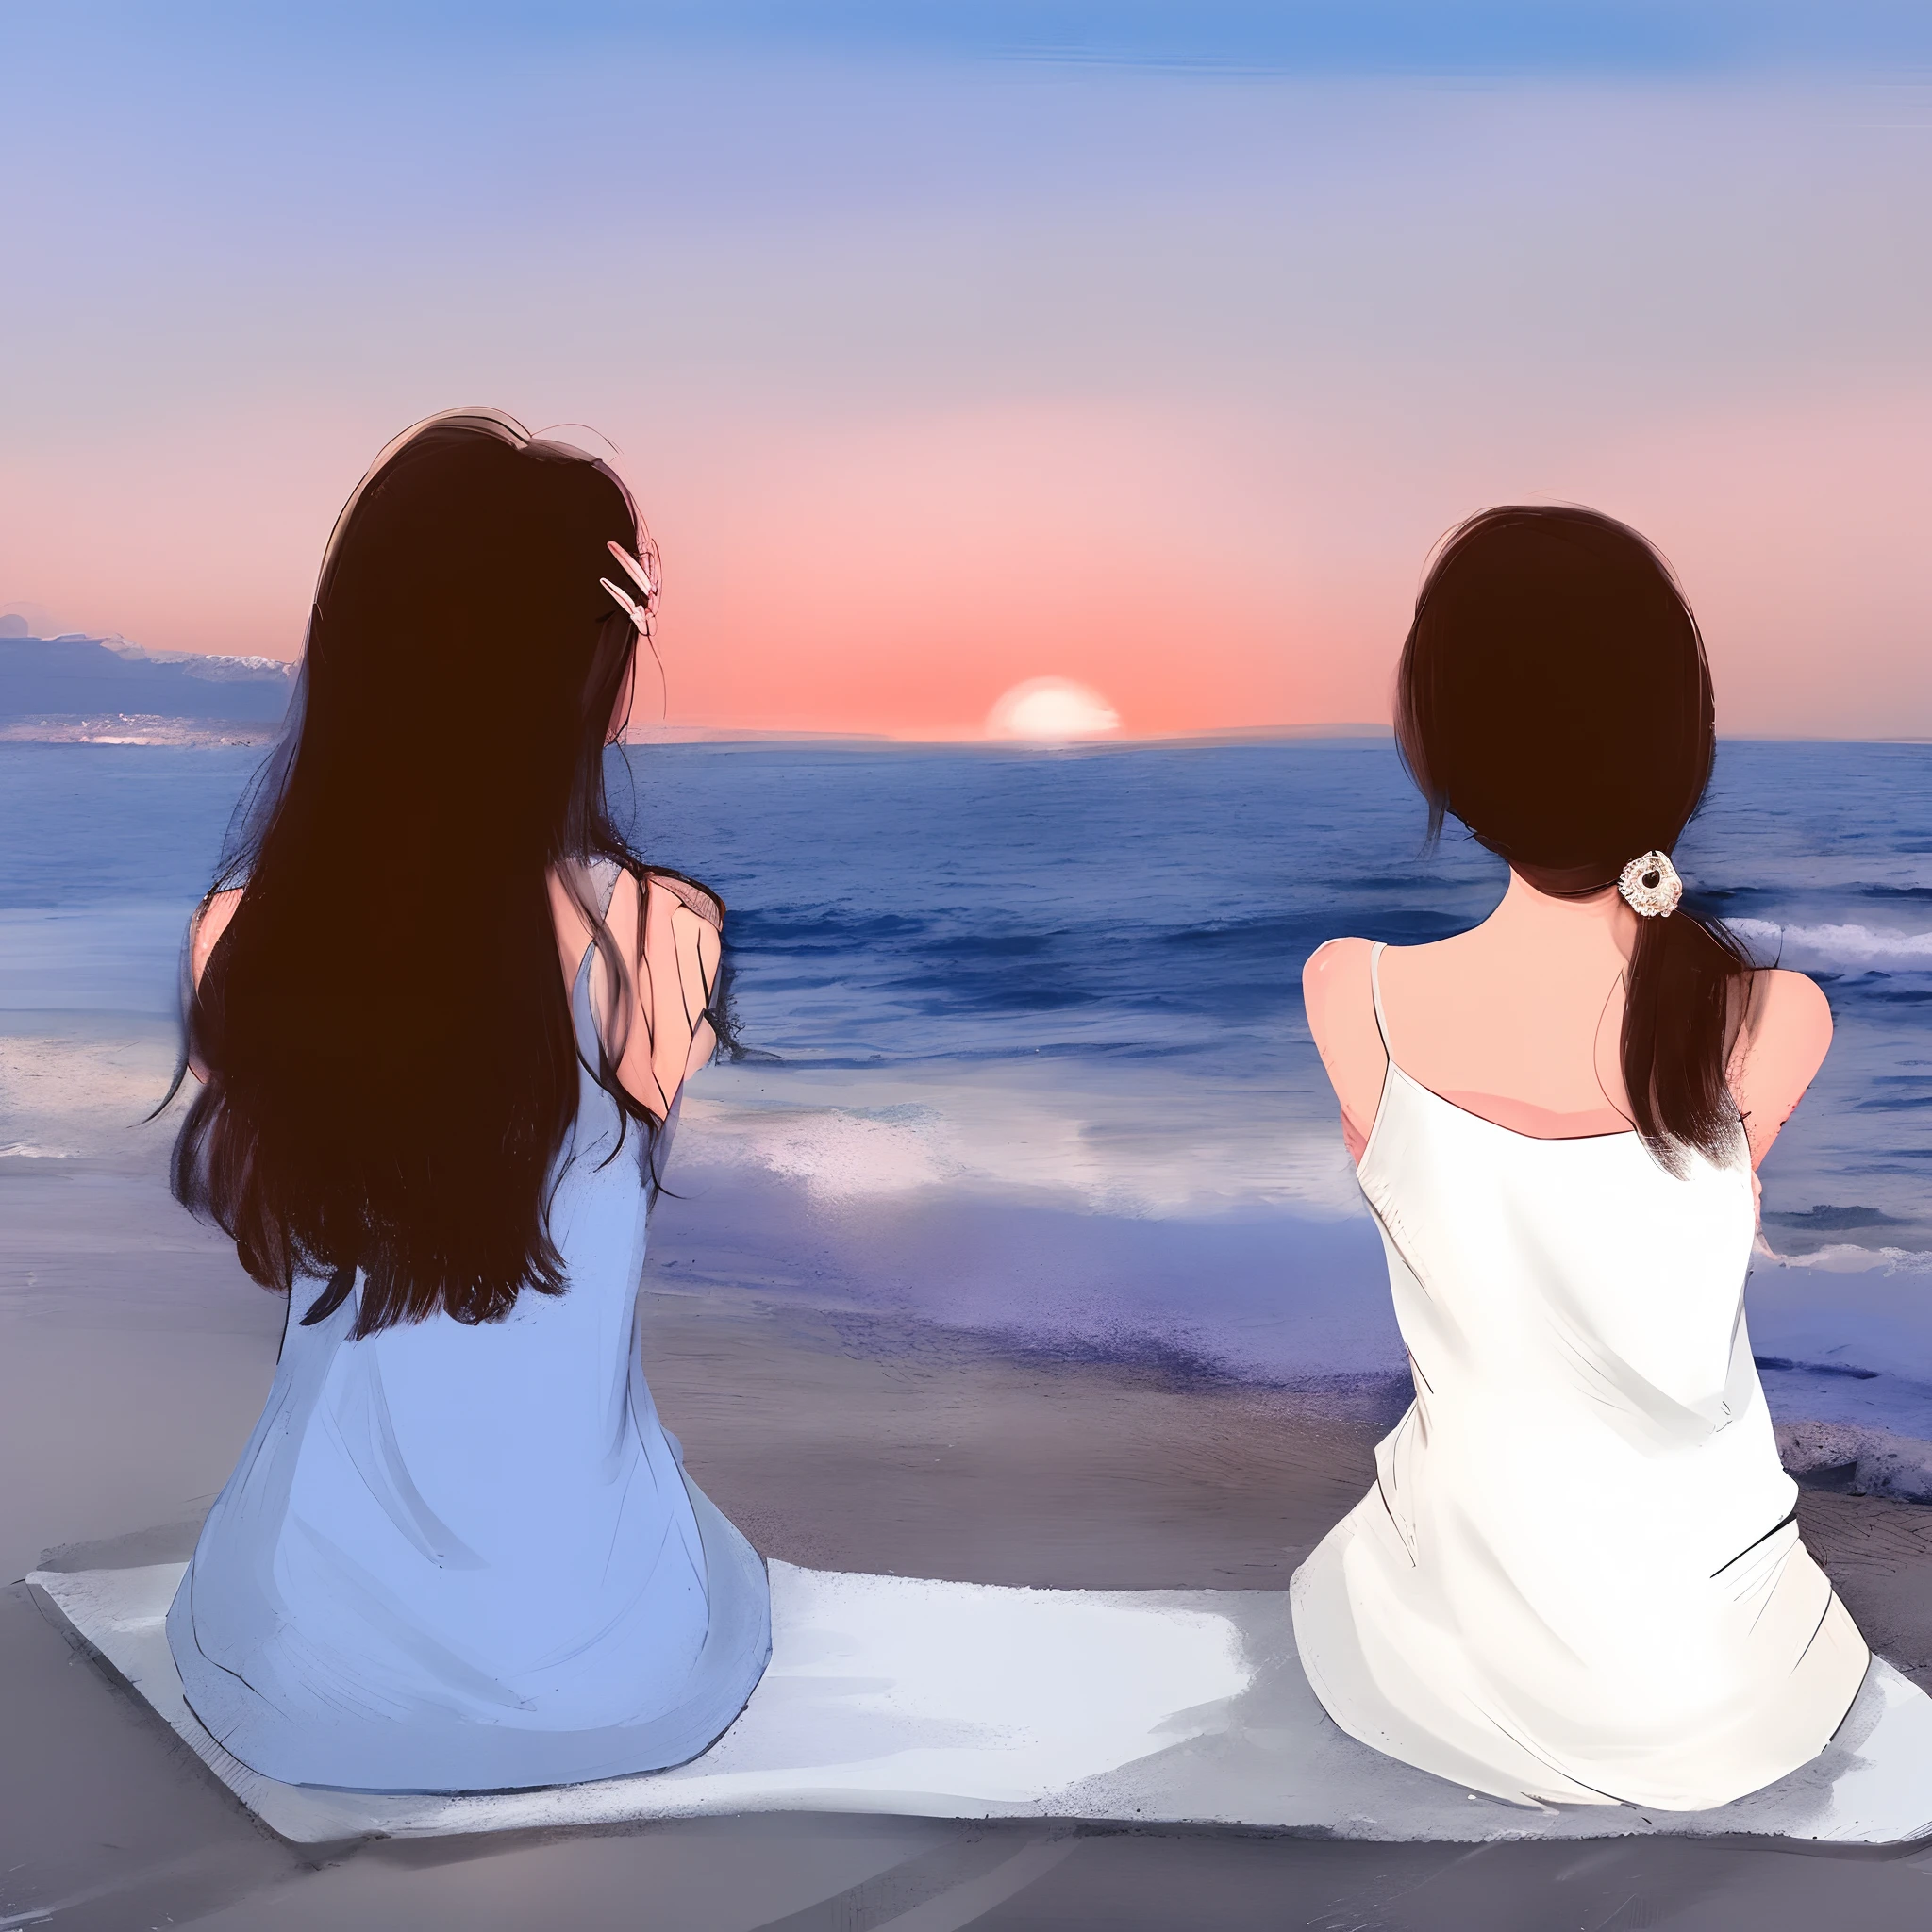 Two women sitting on the beach مشاهدة غروب الشمس, لوحة جميلة من الأصدقاء, مع غروب الشمس, مشاهدة غروب الشمس, مشاهدة غروب الشمس. المانجا اليابانية, على الشاطئ عند غروب الشمس, على الشاطئ عند غروب الشمس, مشاهدة غروب الشمس, مع غروب الشمس, الجلوس على الشاطئ, فتاتان, على الشاطئ عند غروب الشمس, صورة فنية رقمية, على الشاطئ أثناء غروب الشمس